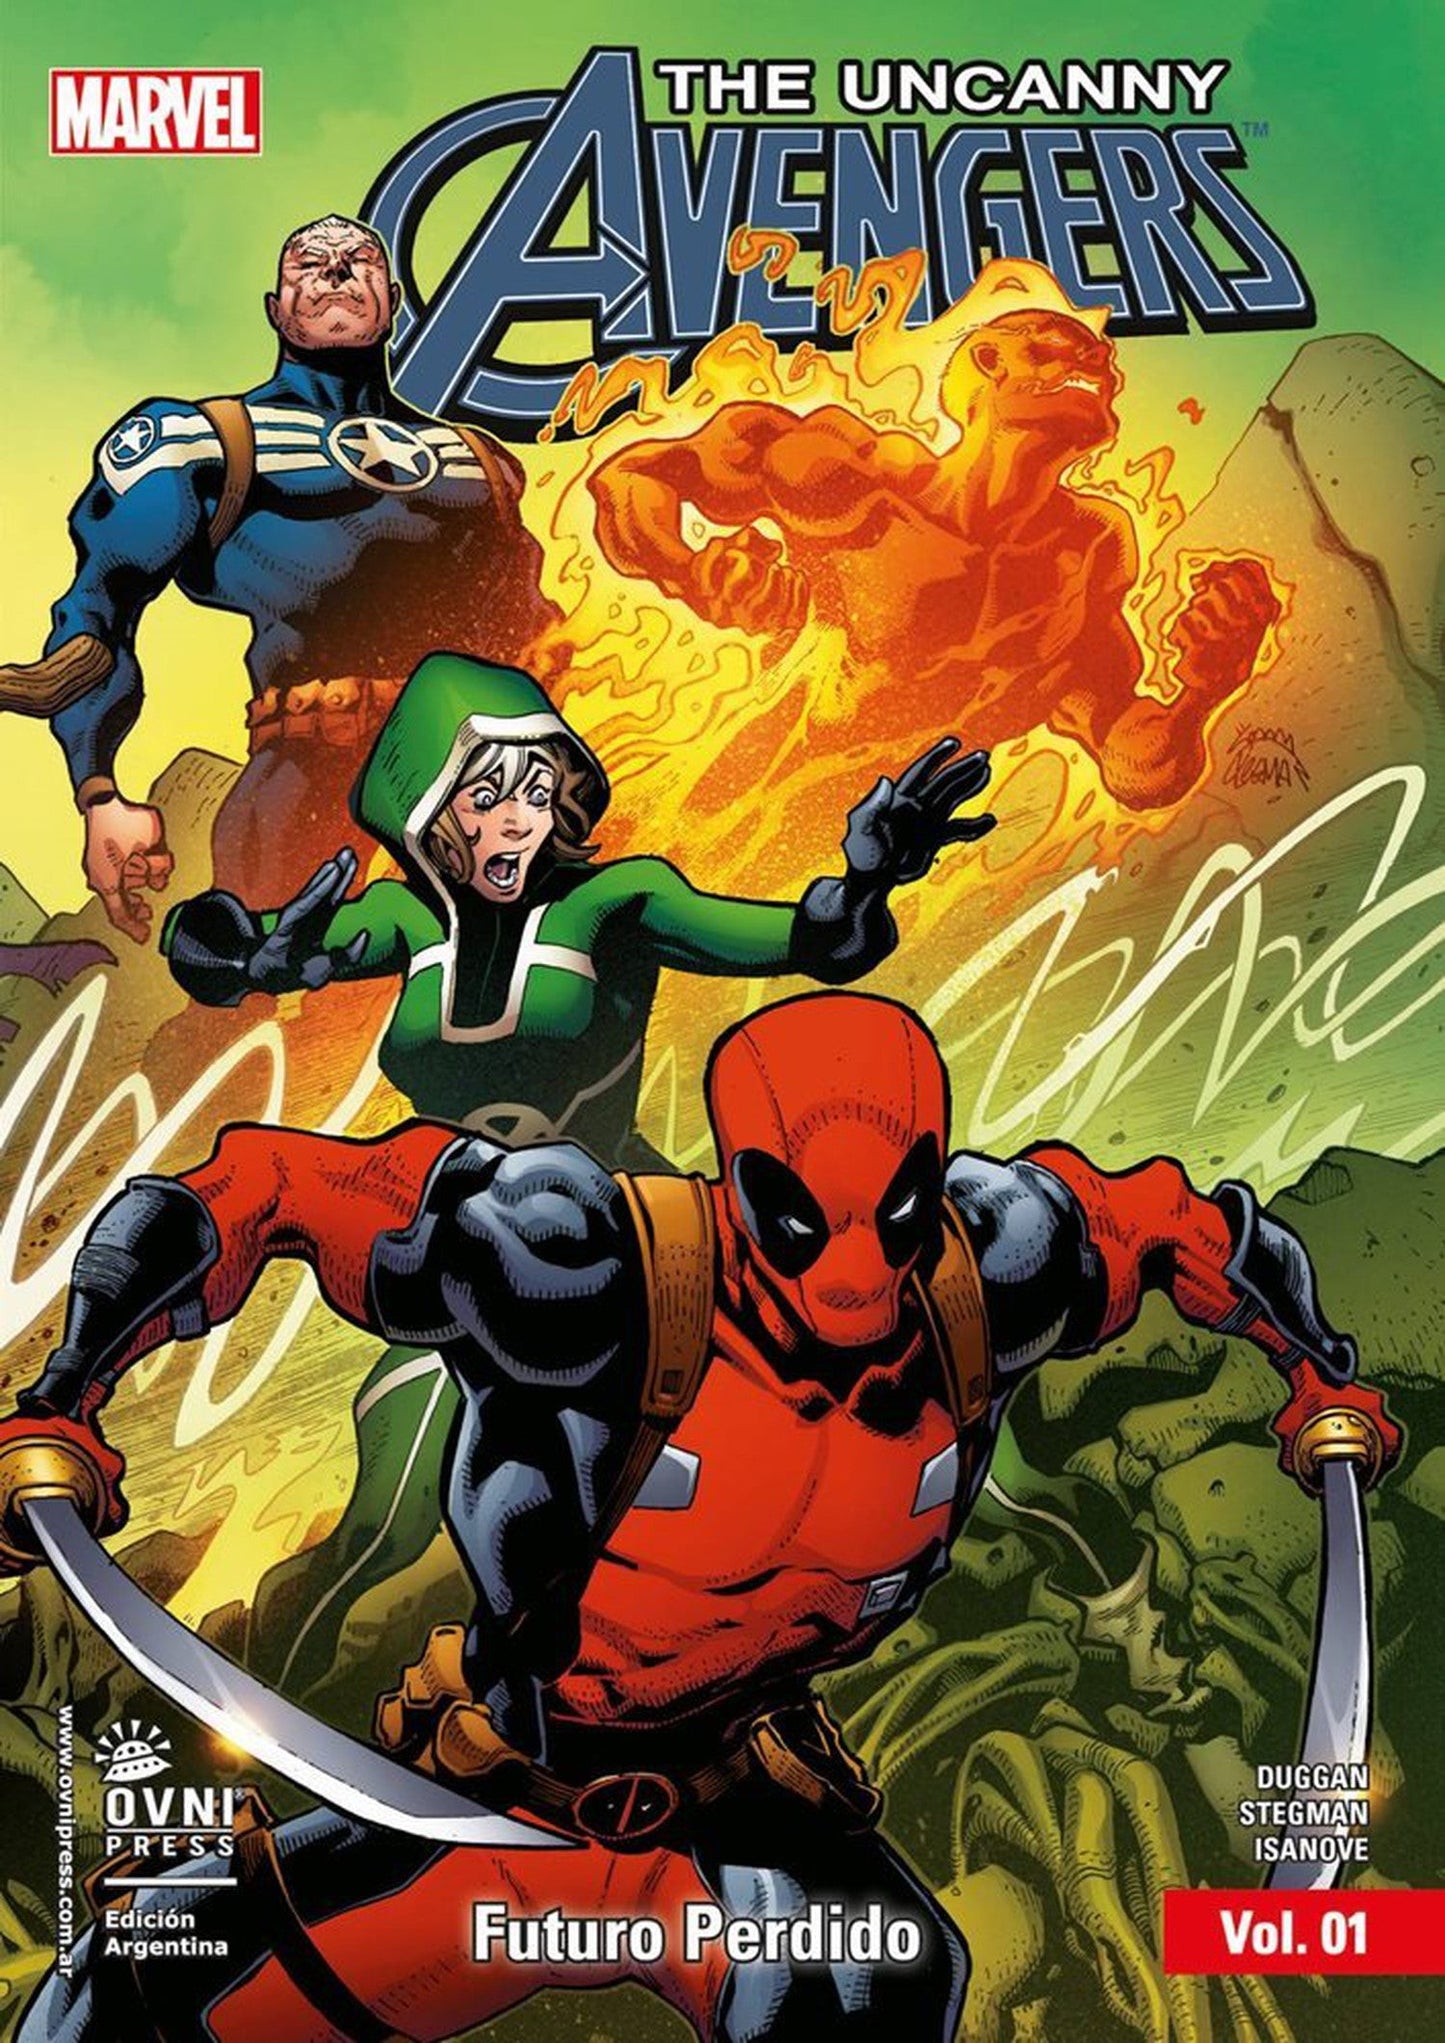 The Uncanny Avengers #1 Futuro Perdido OVNI Press ENcuadrocomics